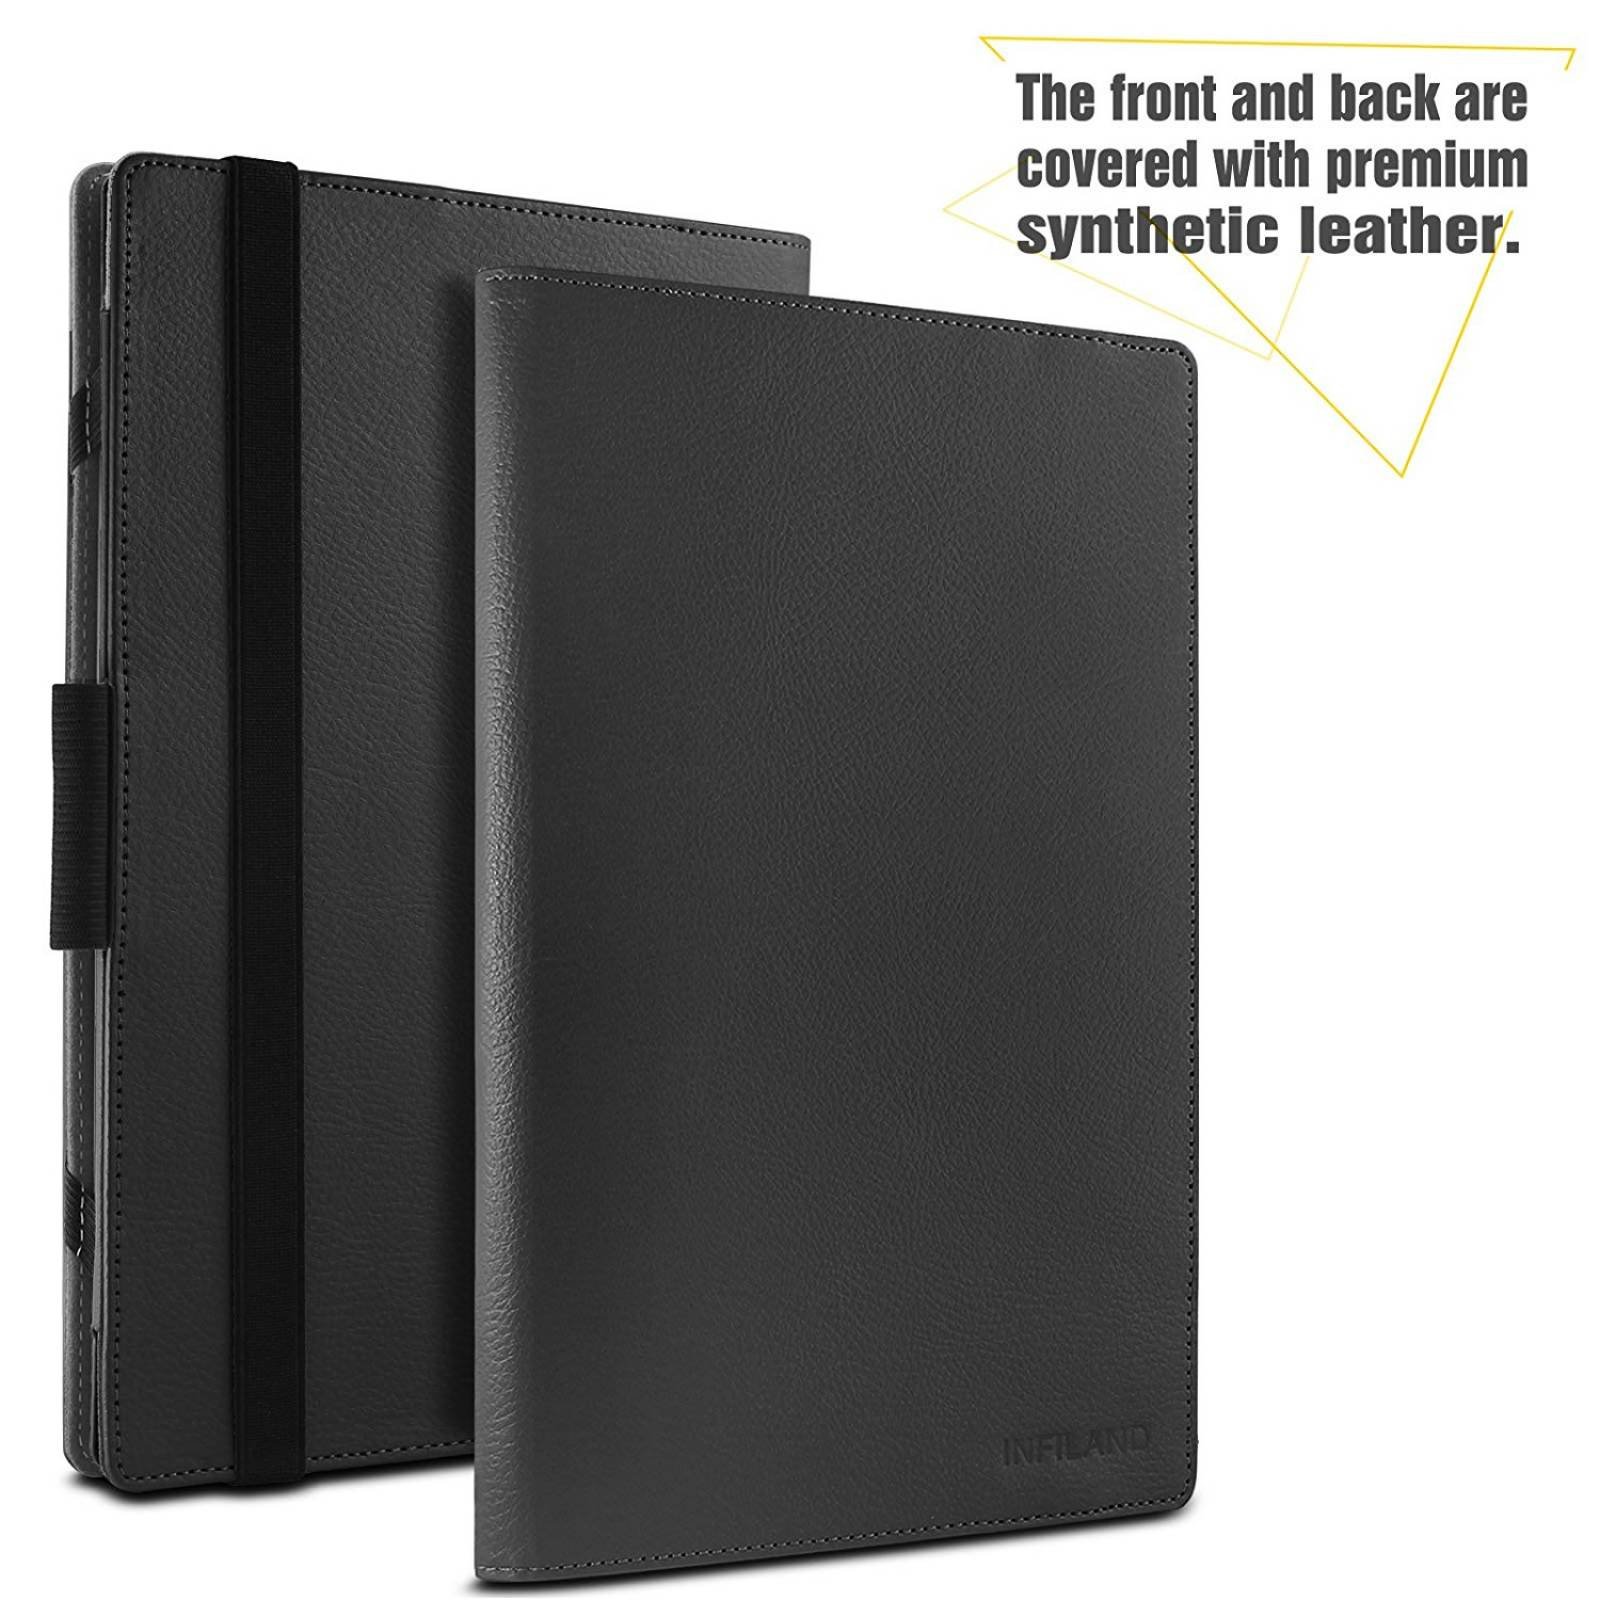 Caso libro Yoga Infiland Lenovo, Folio Premium PU cue -Negro